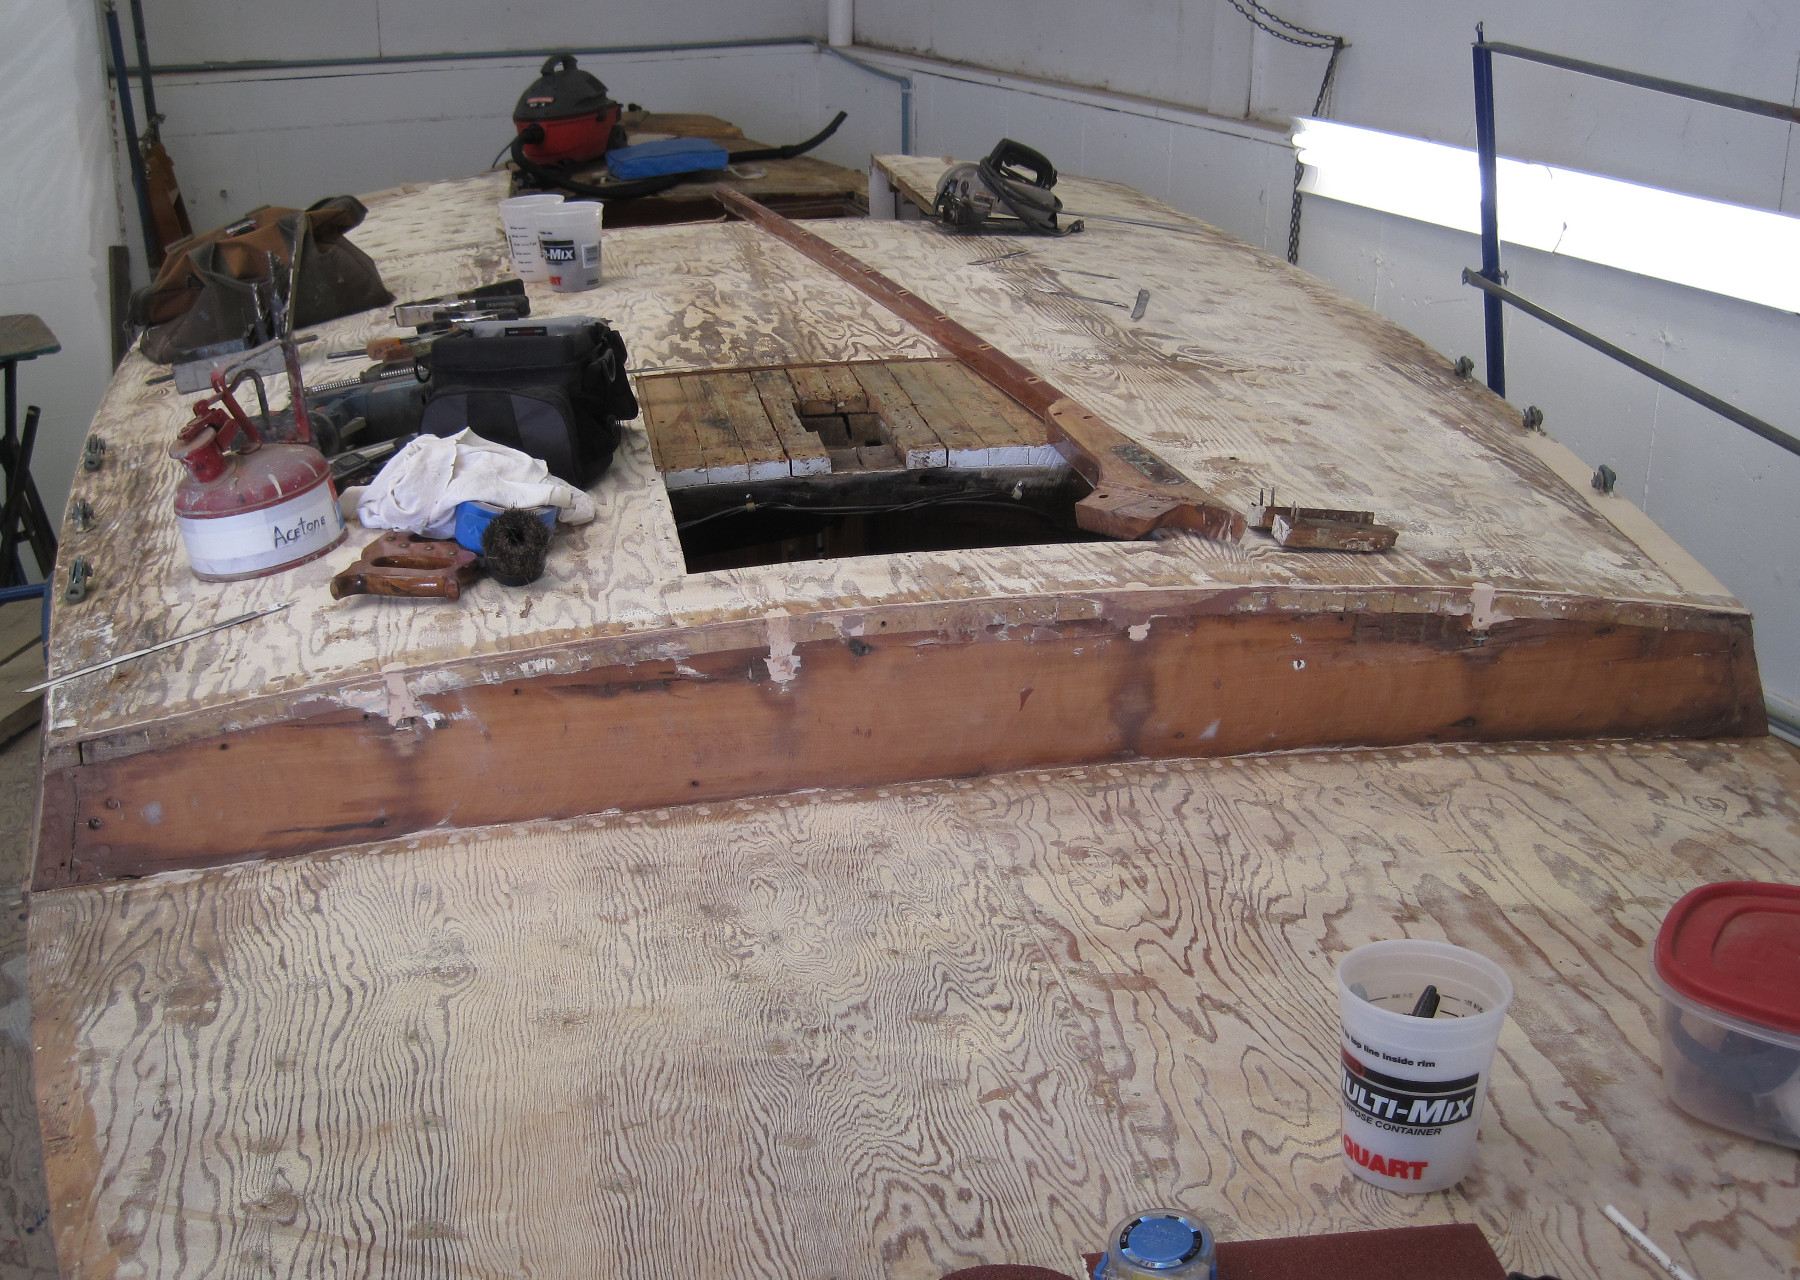 Wooden Boat Restoration - Kestrel - Kestrel's mast step was also determined to be compromised.